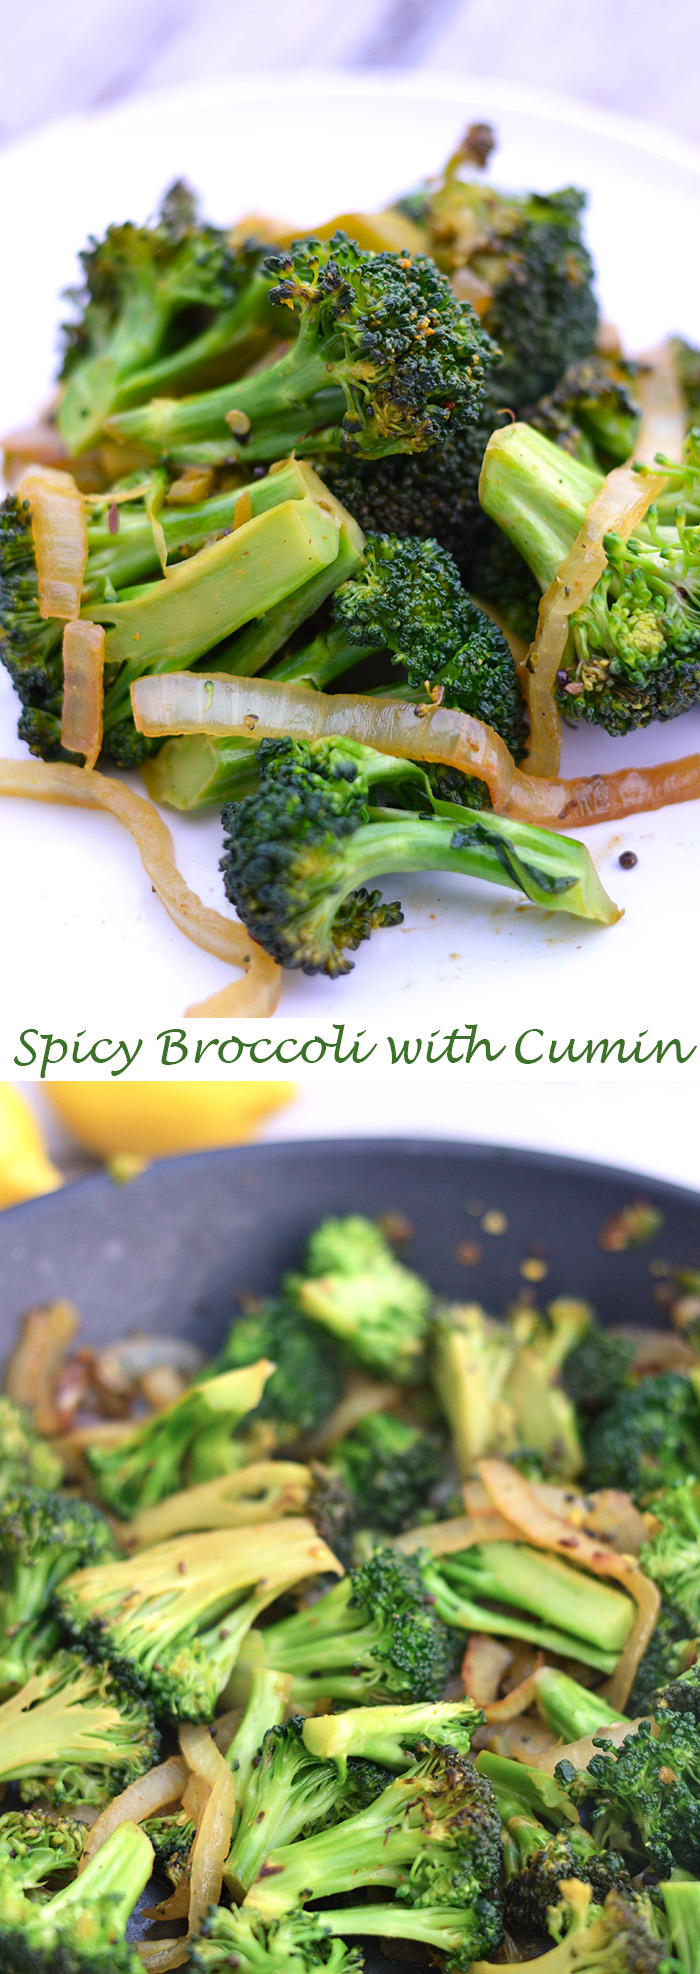 Spicy Cumin Scented Broccoli